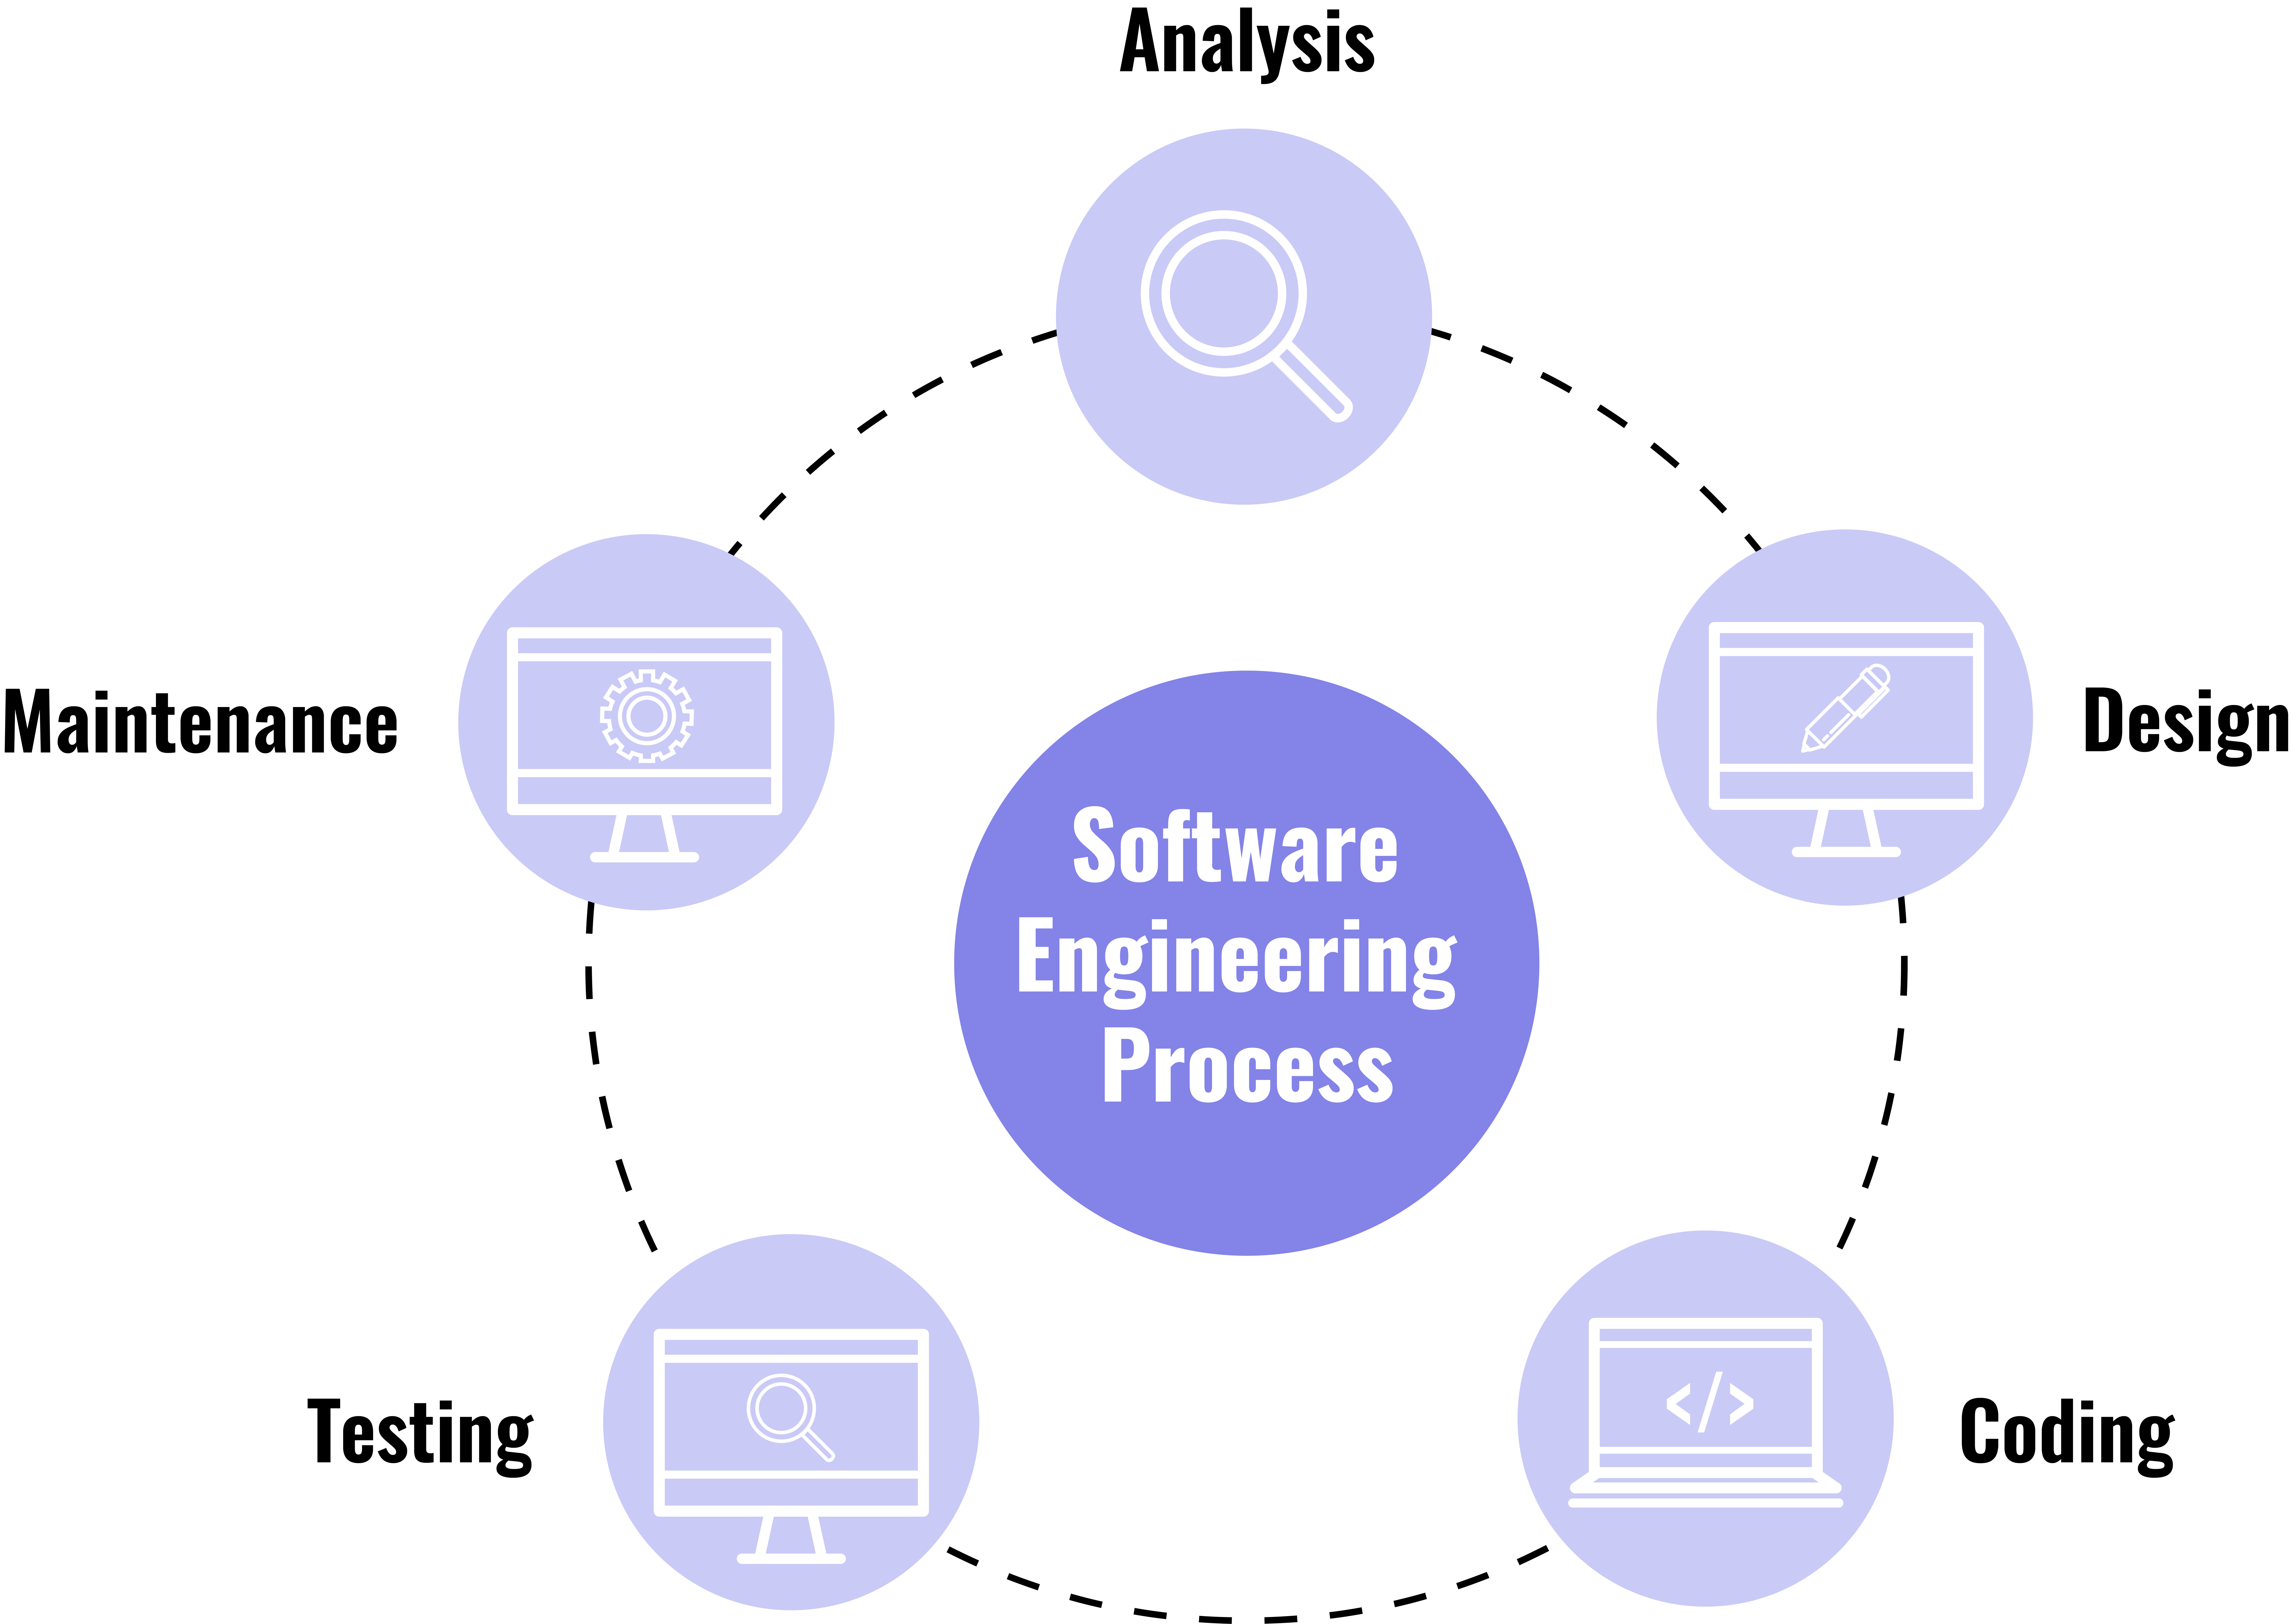 Software Engineering Process